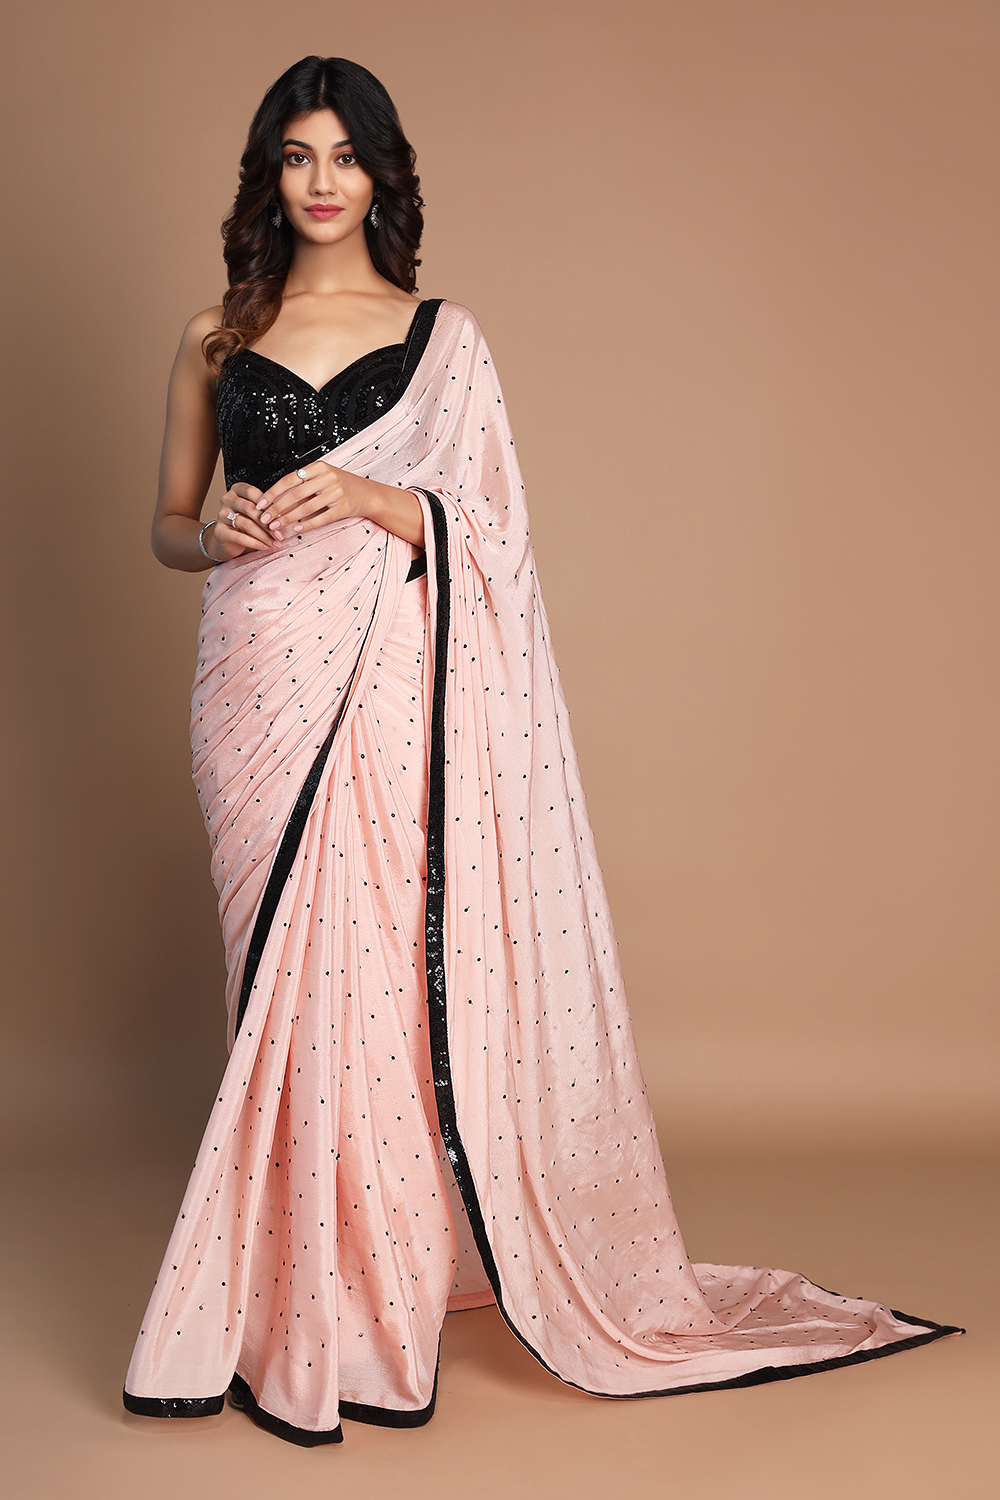 Ella Baby Pink Pure Silk-Crepe Saree with Black Embroidered Blouse | Saree  dress, Saree models, Elegant saree